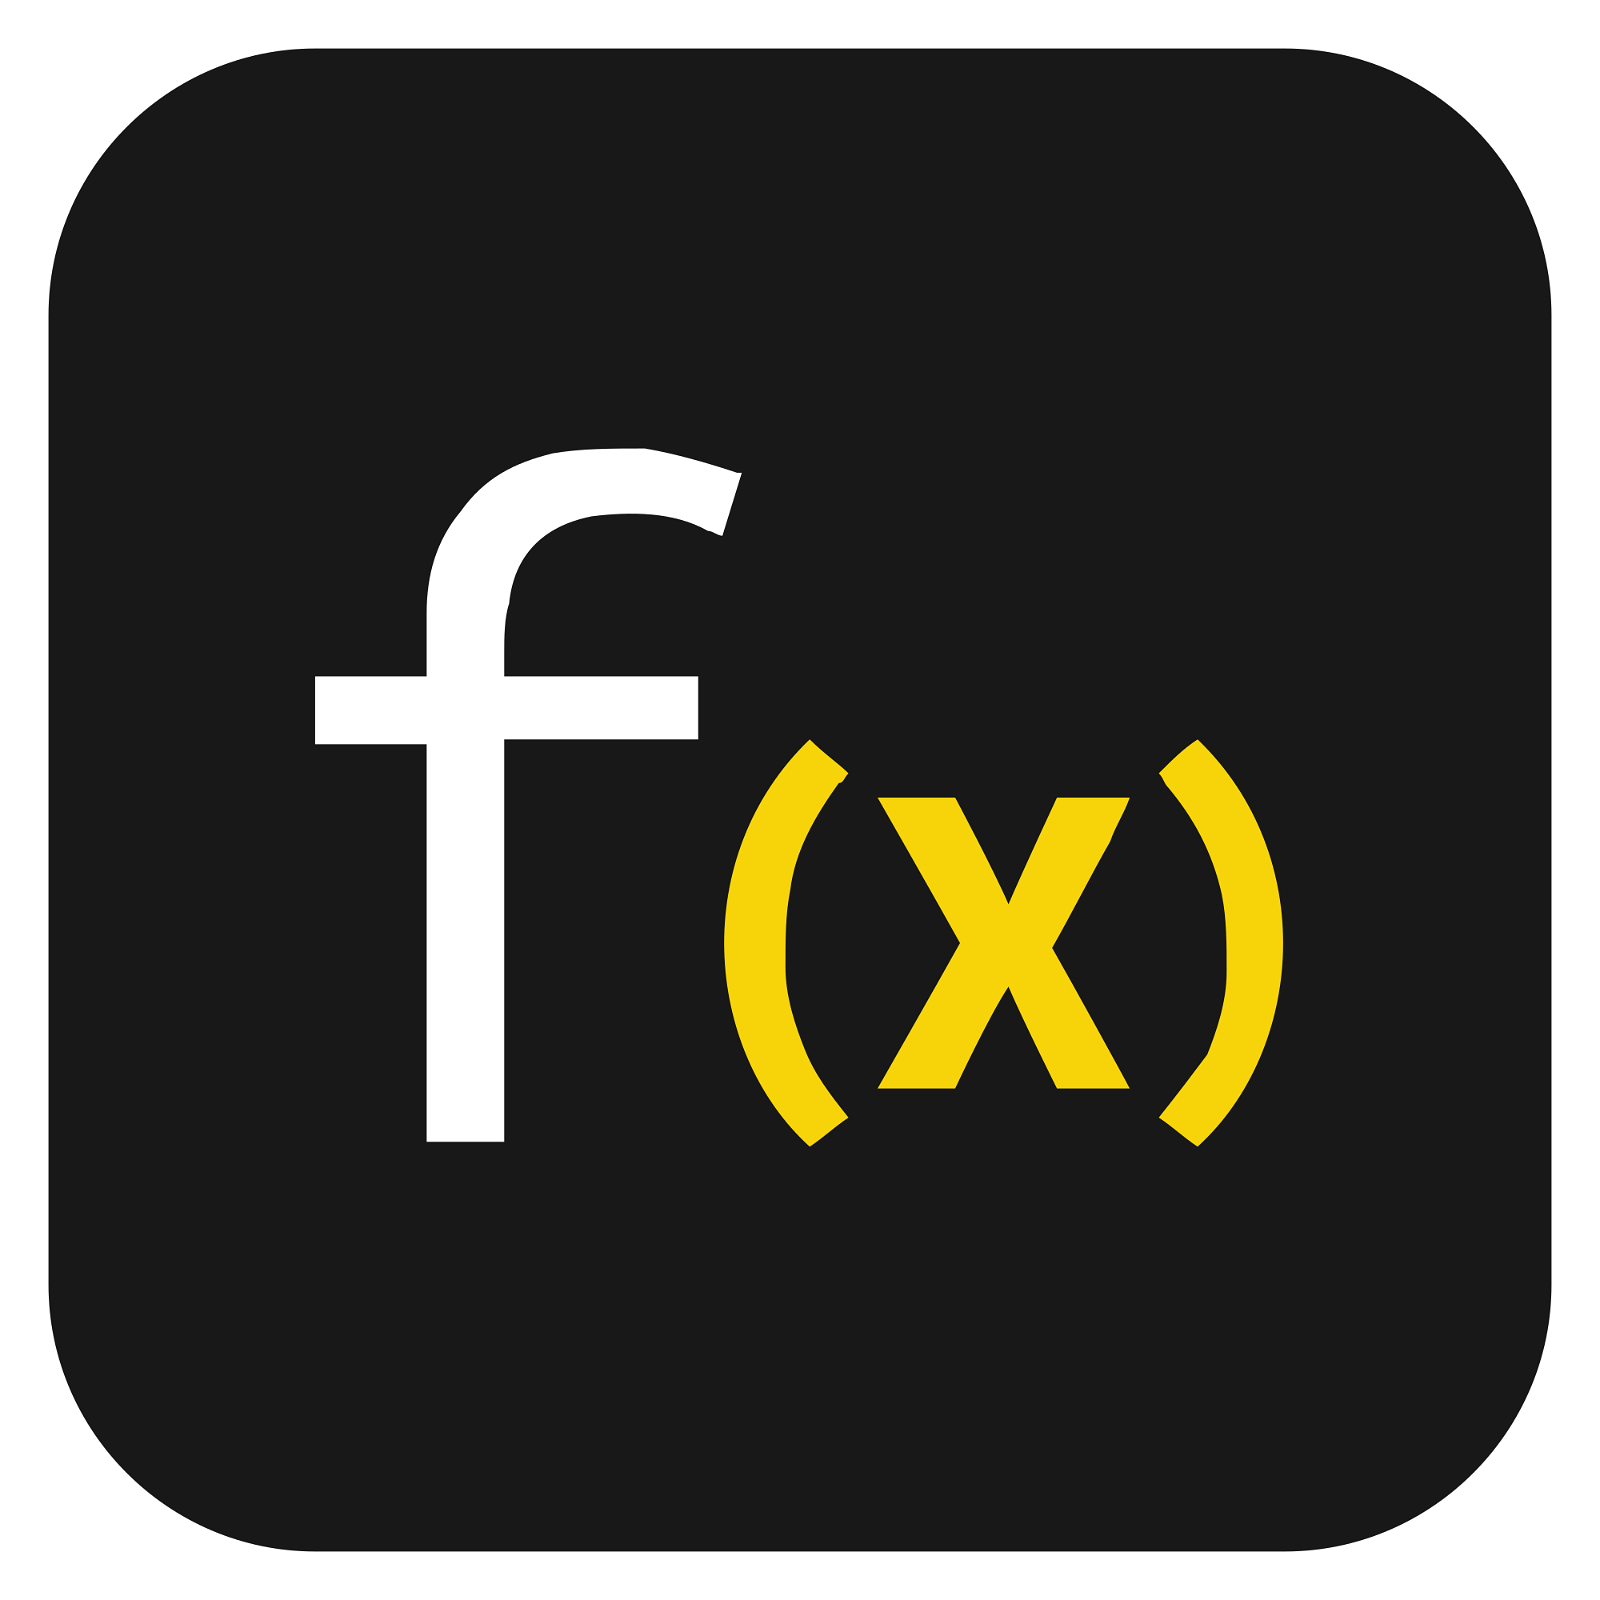 Function X Logo